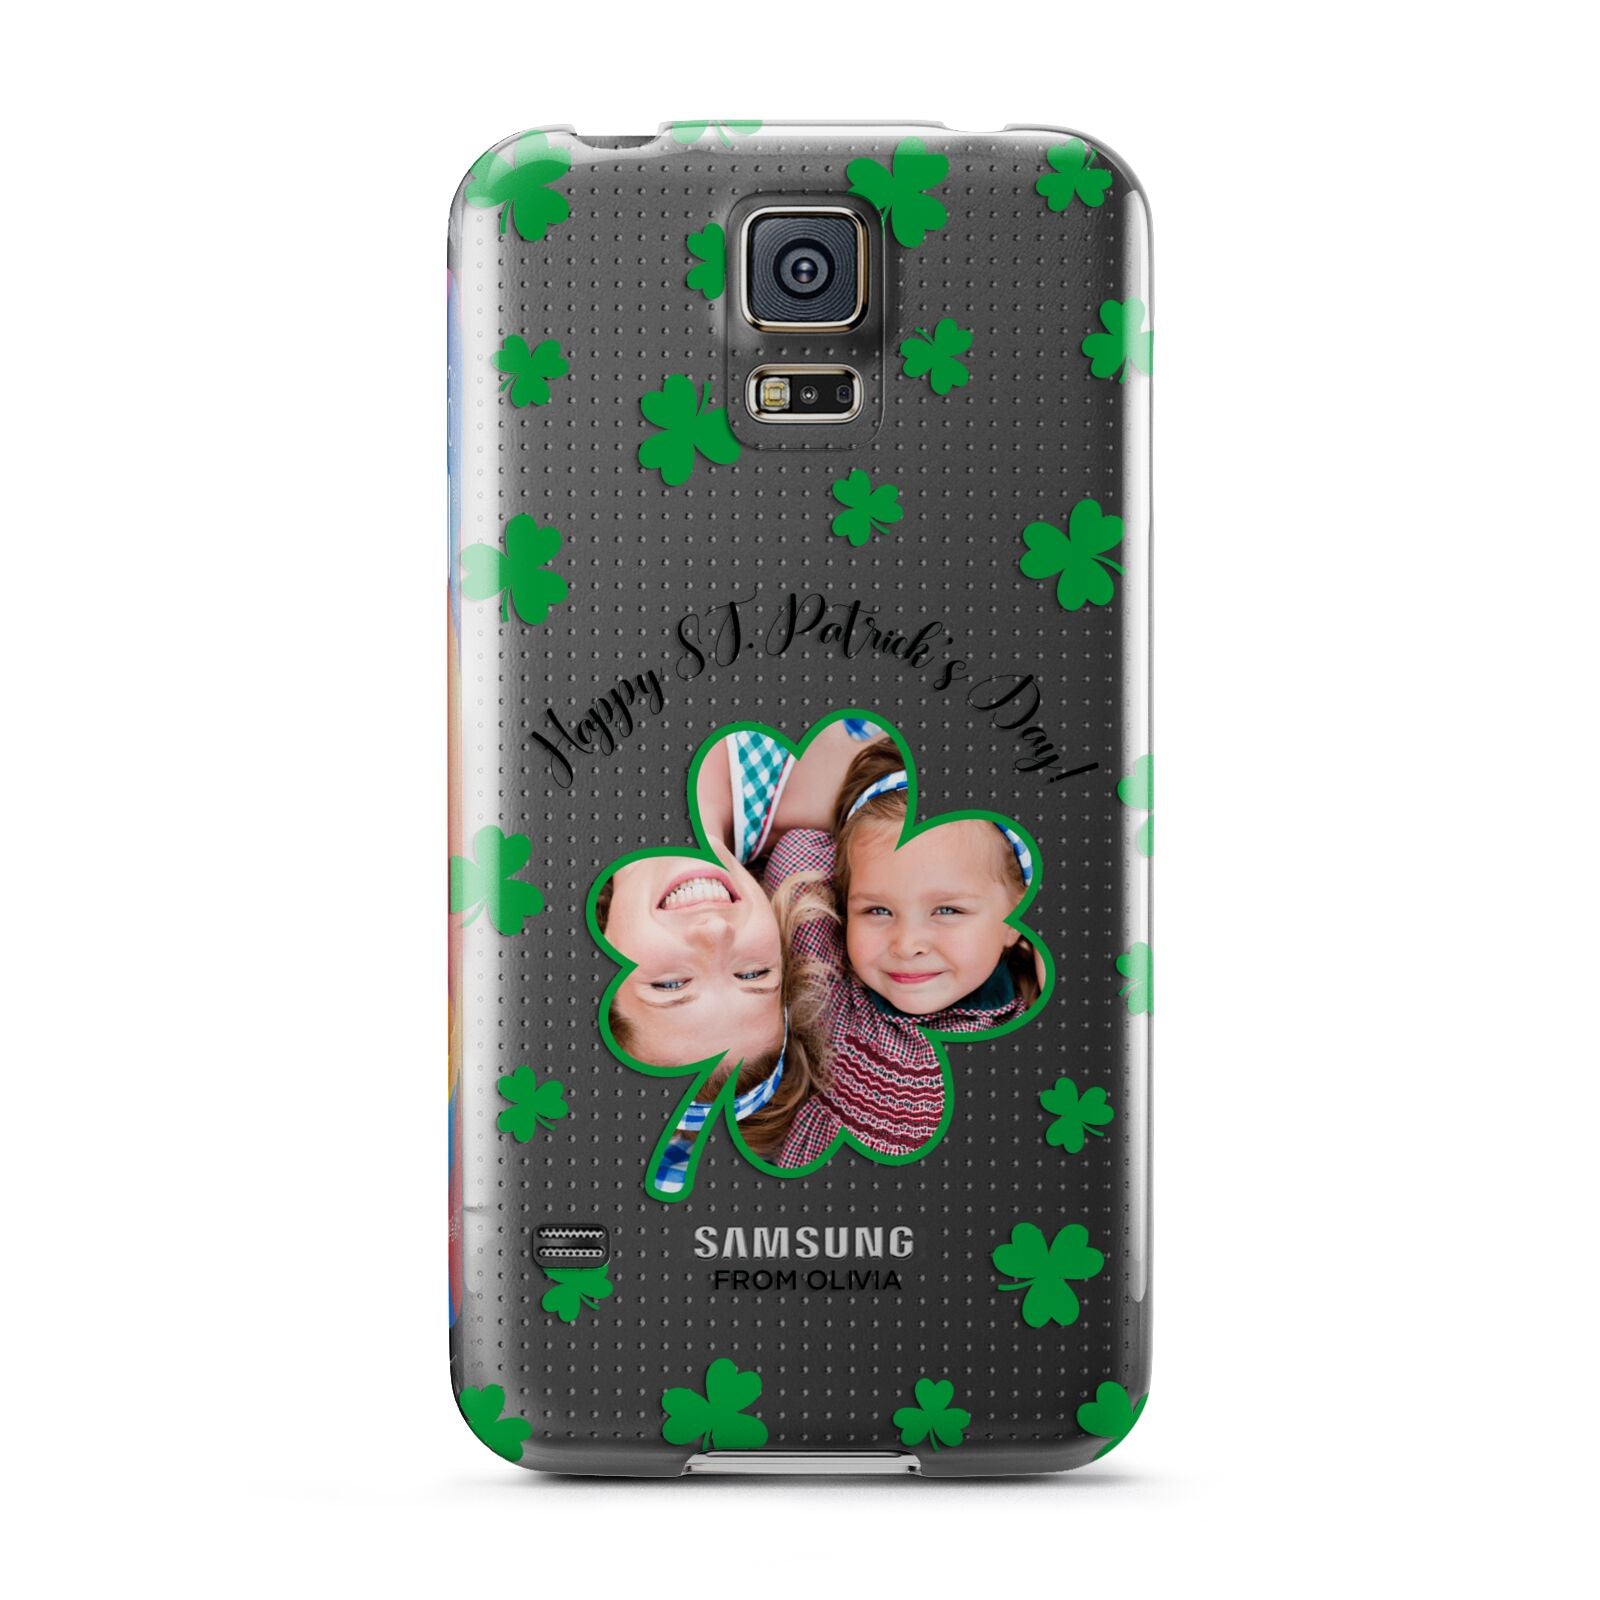 St Patricks Day Photo Upload Samsung Galaxy S5 Case